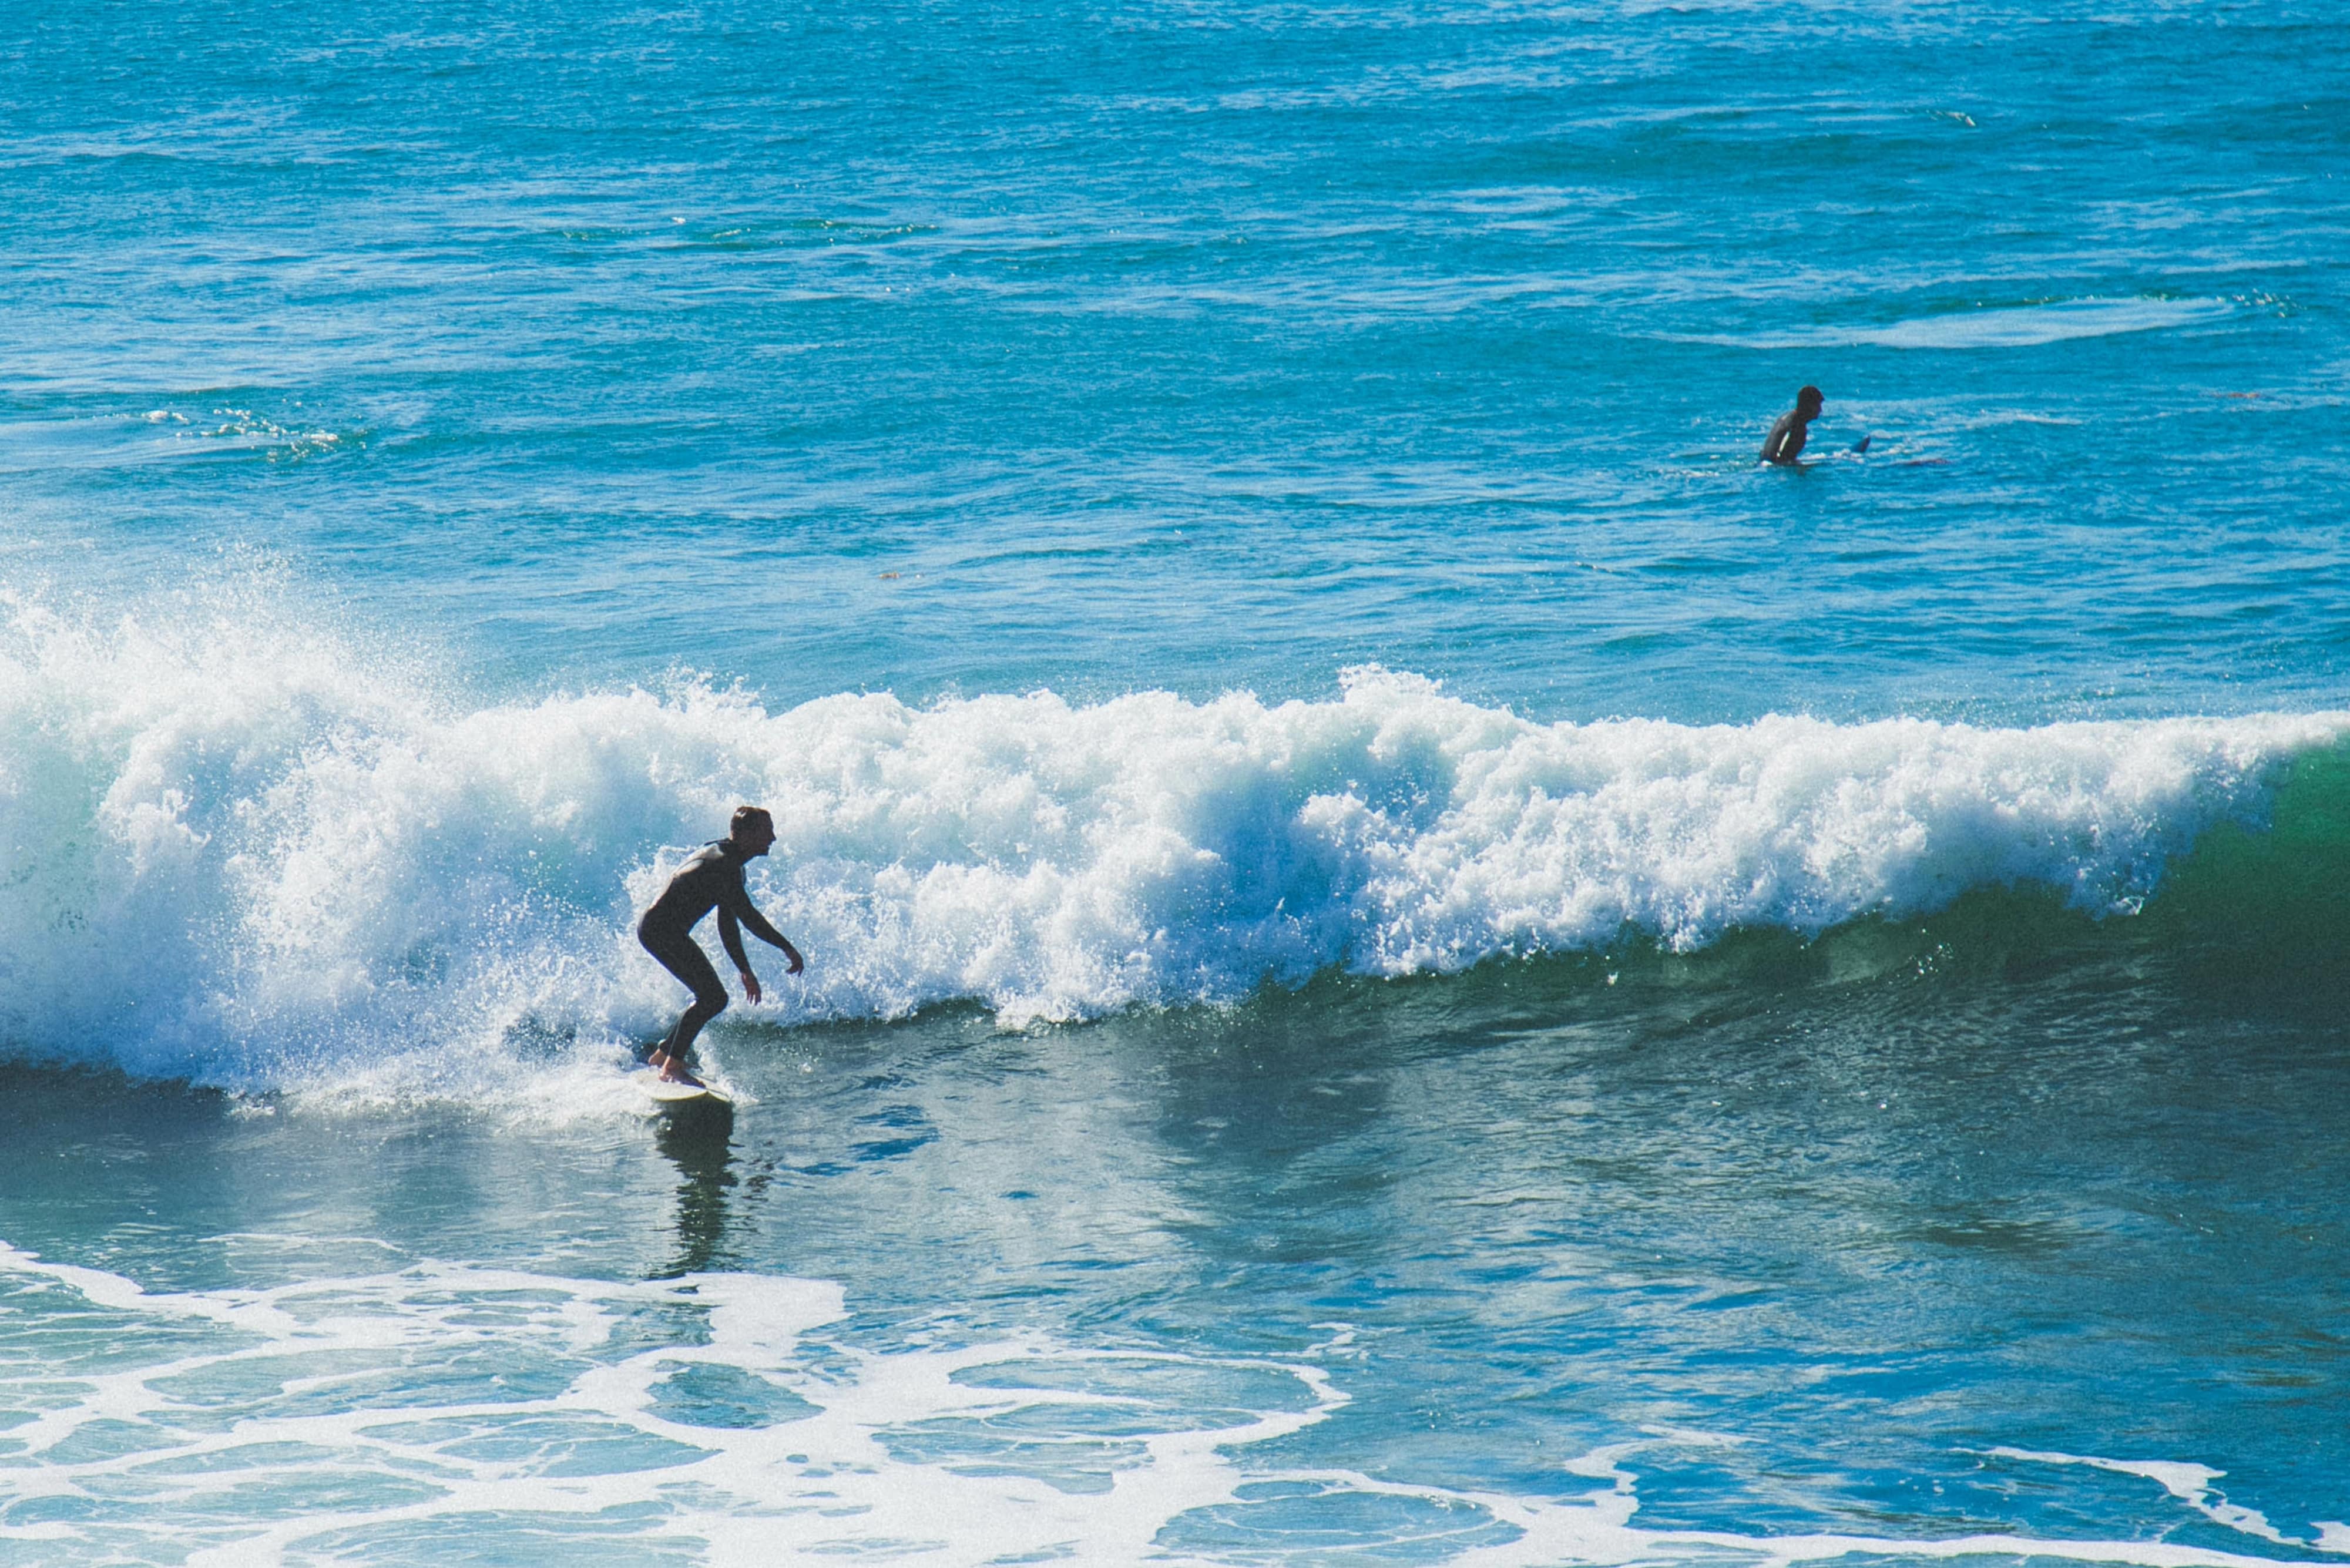 Surfer in action in Laguna beach in southern California in January heisler park